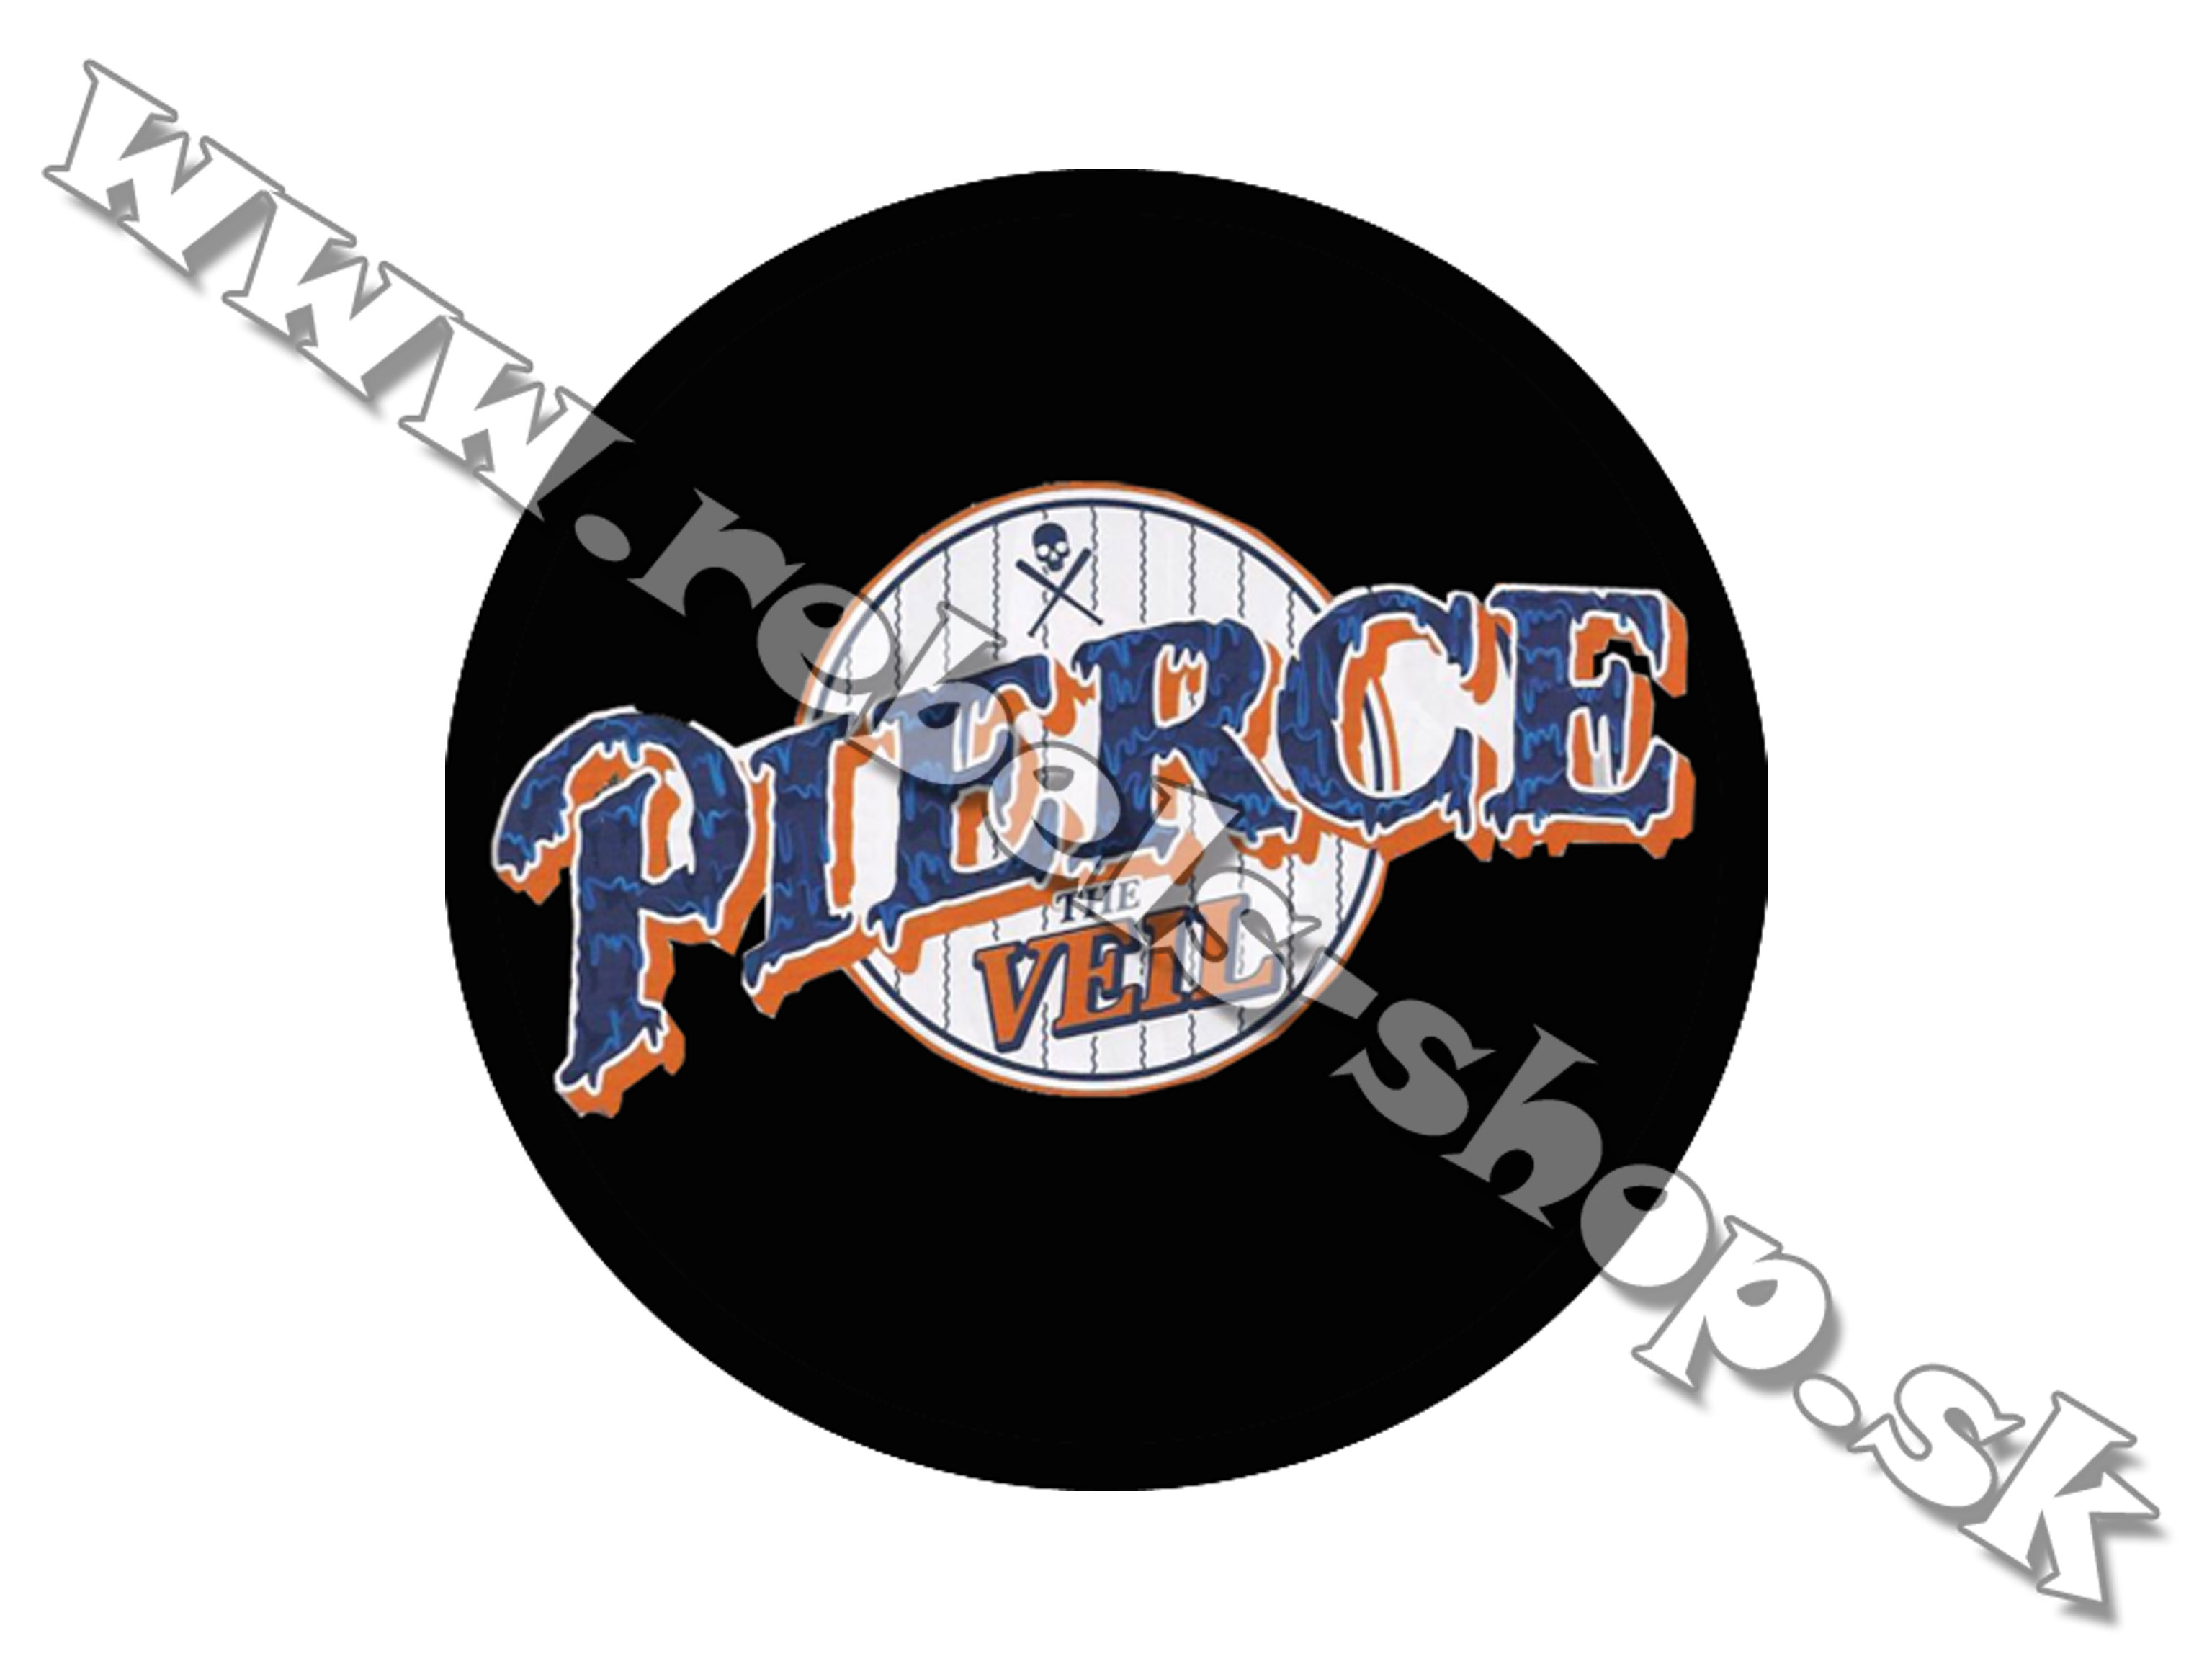 Odznak "Pierce the Veil"